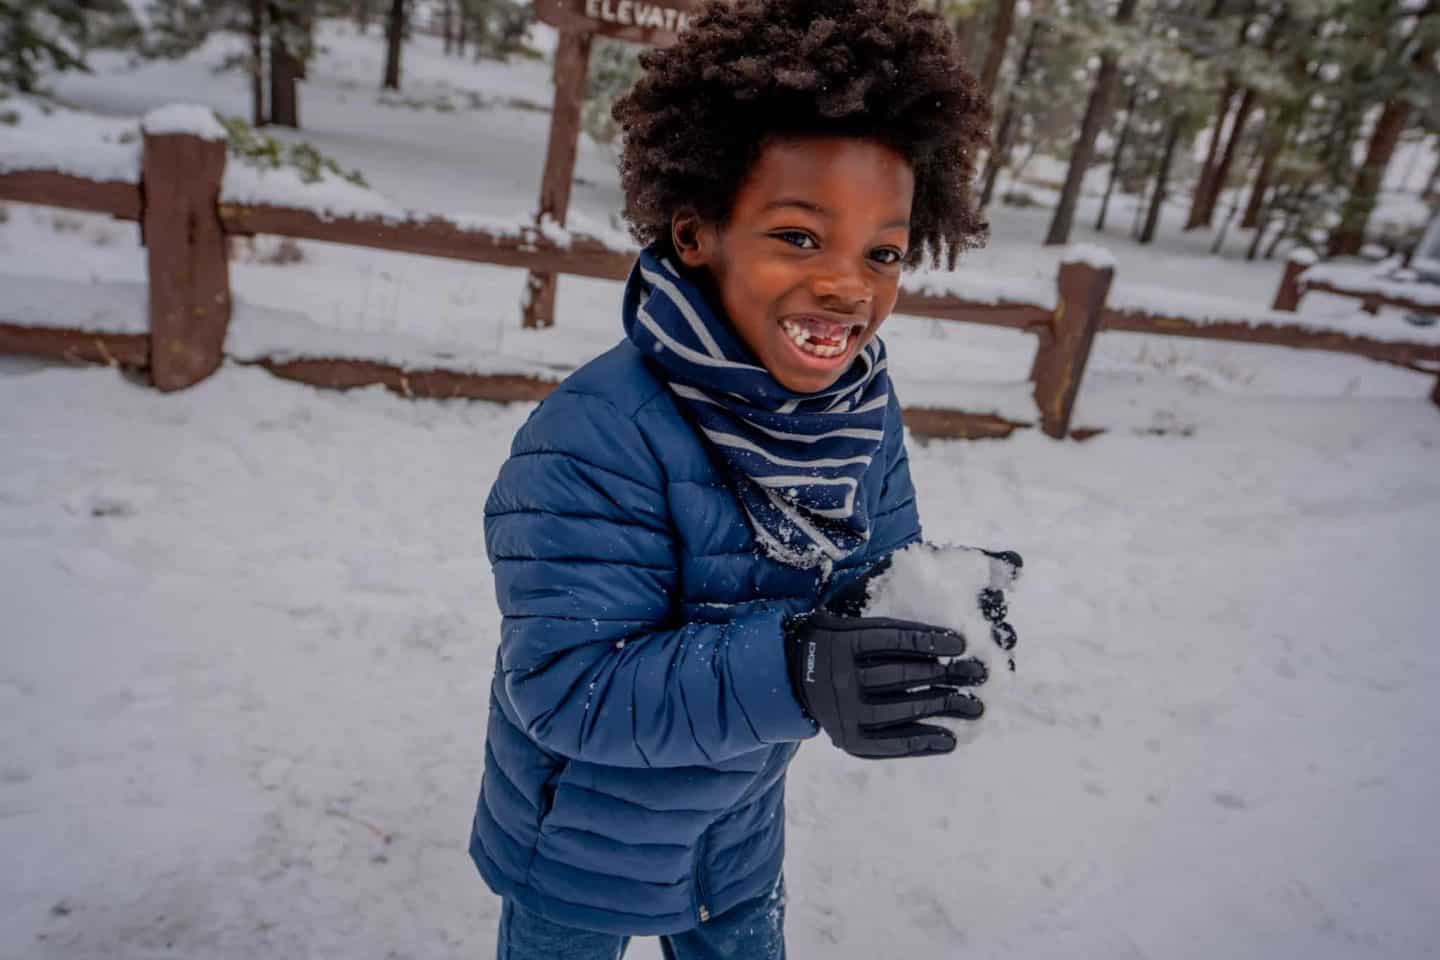 A boy making a snowball.